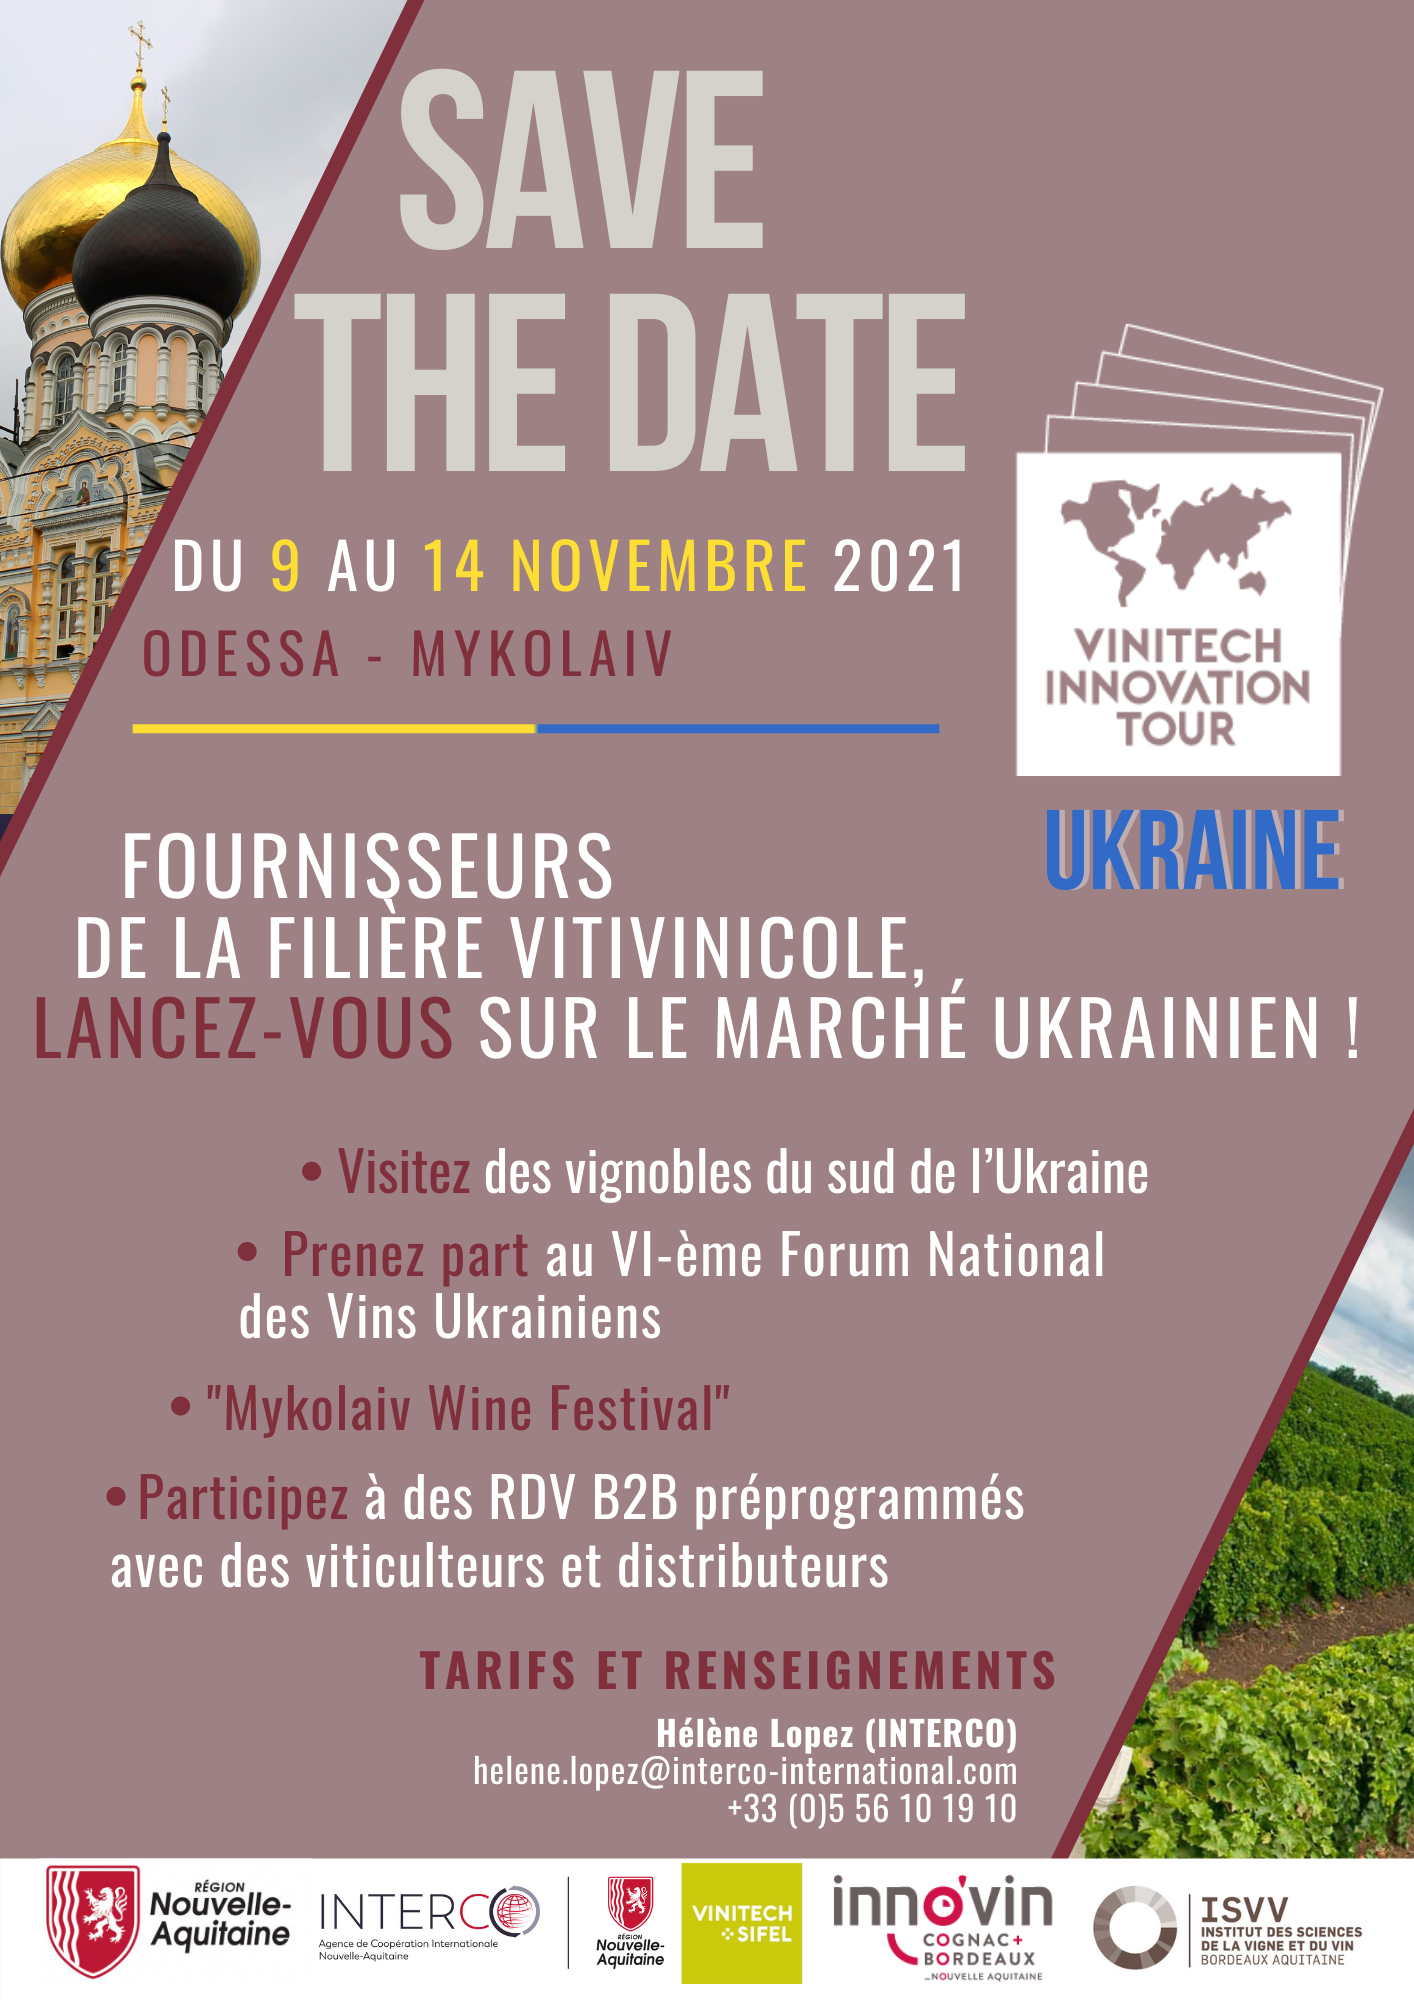 SAVE THE DATE : Vinitech-Innovation Tour UKRAINE